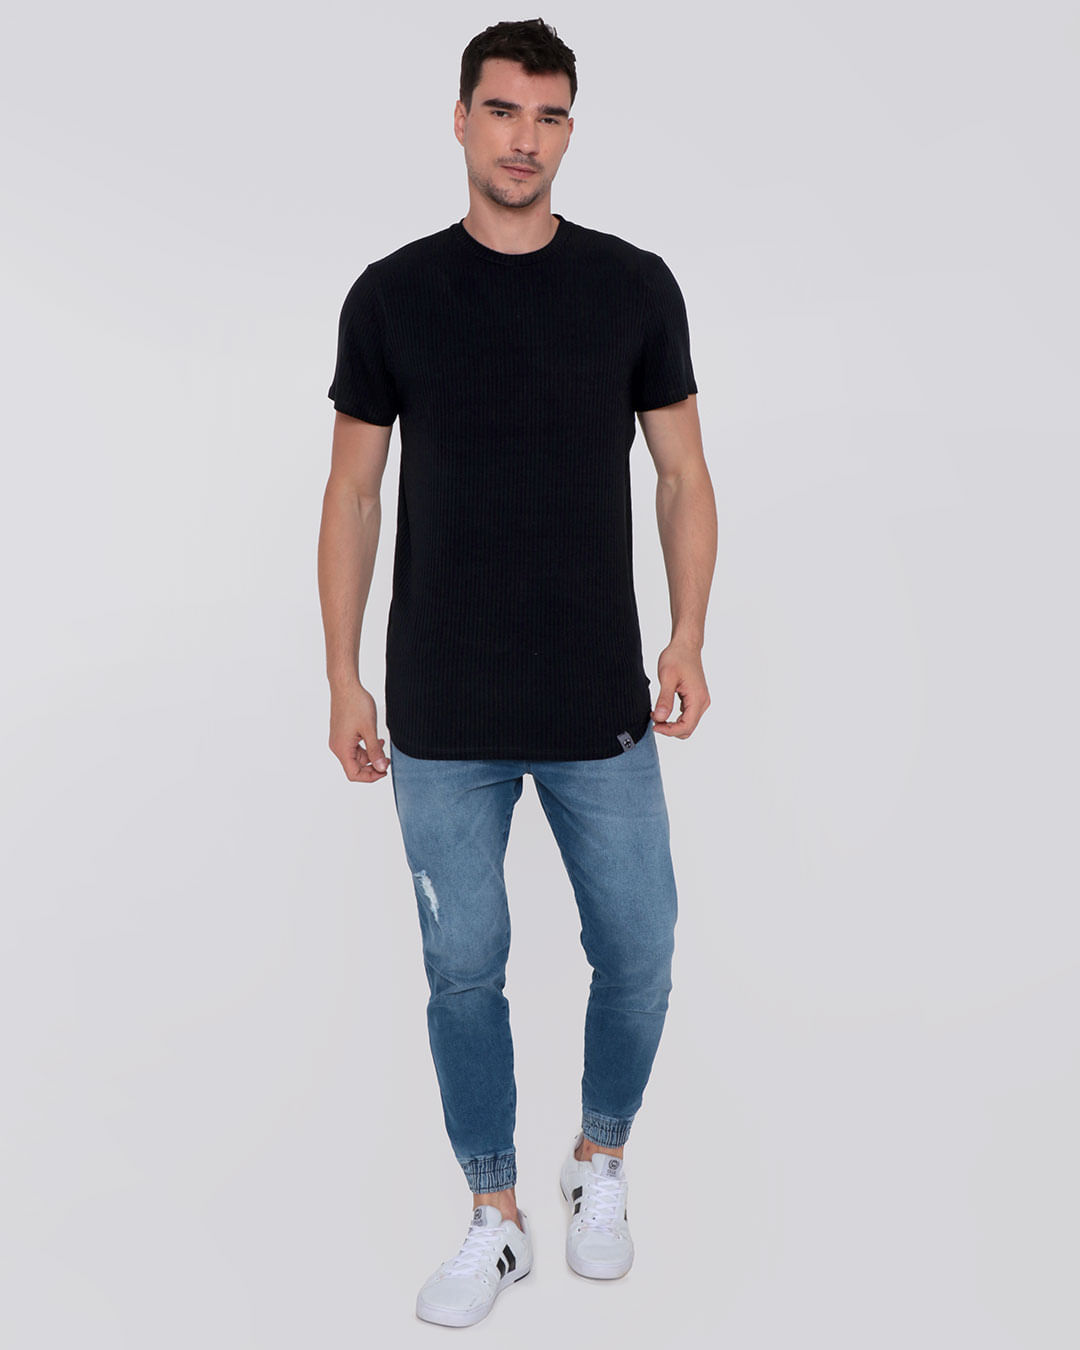 Camiseta-Masculina-Long-Line-Canelada-Preta